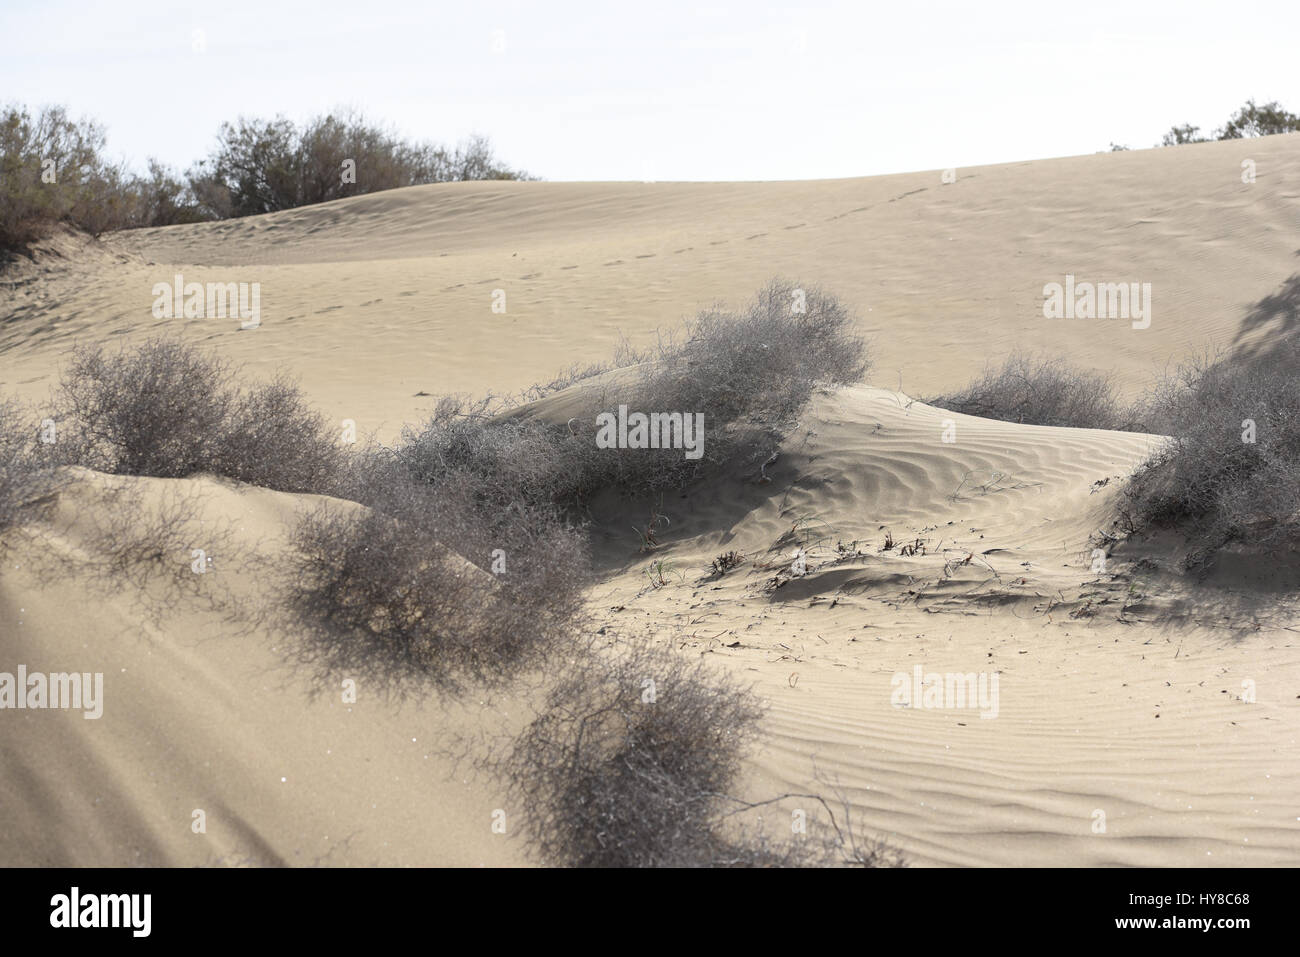 dunes of sand Stock Photo